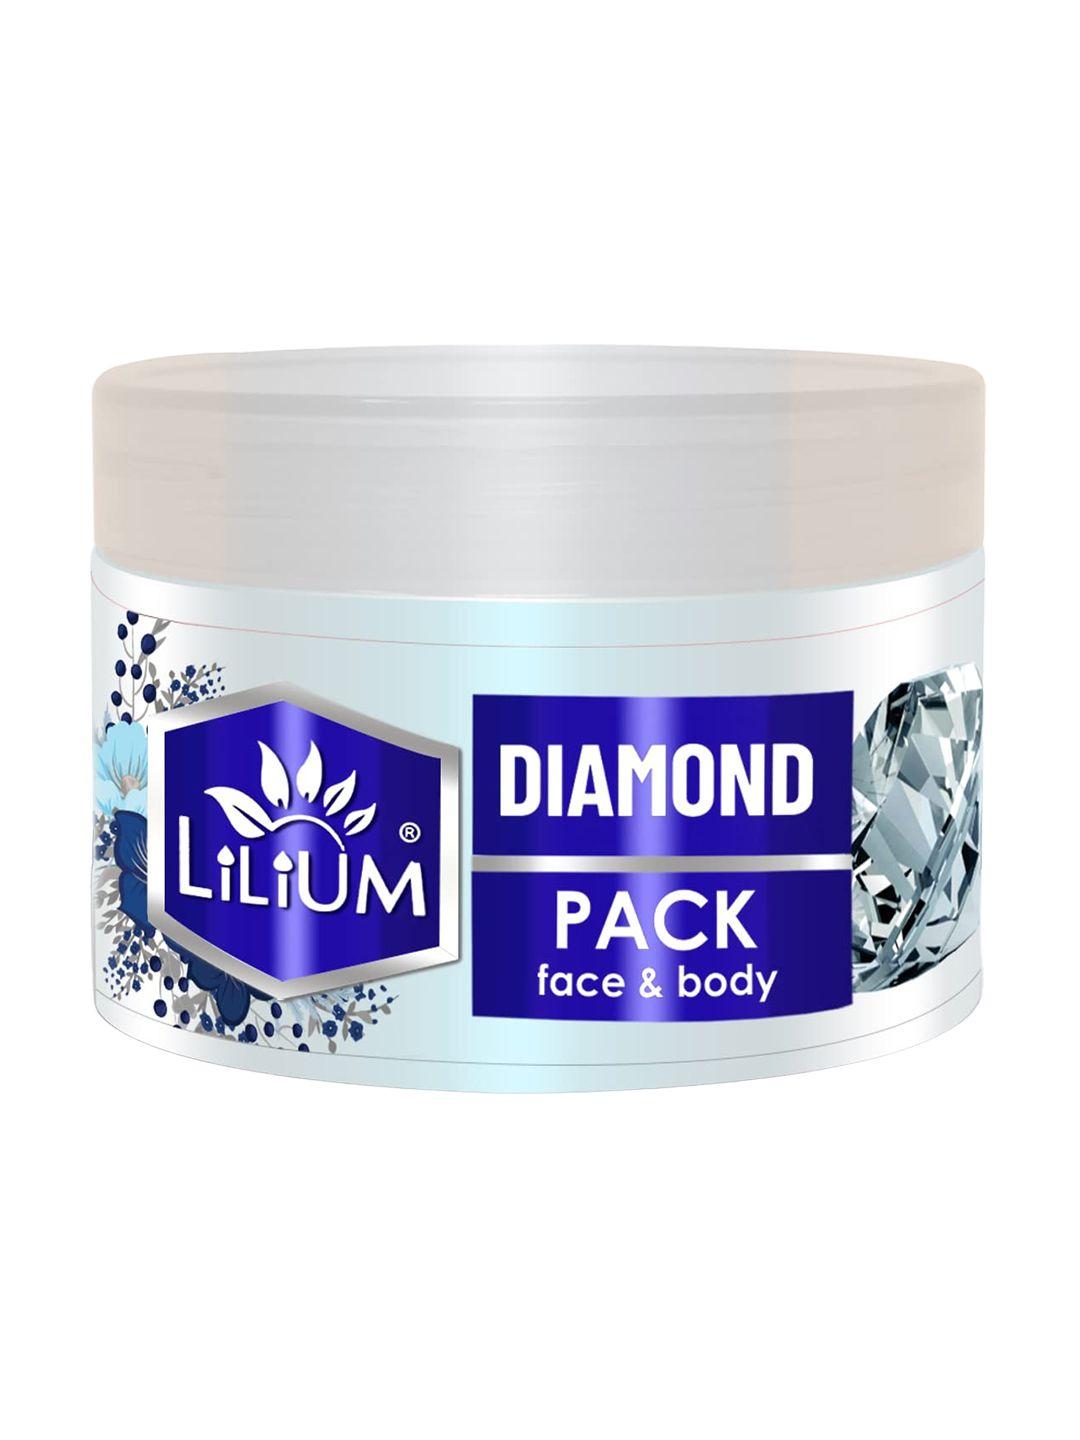 lilium diamond 2-pcs face pack 250g each